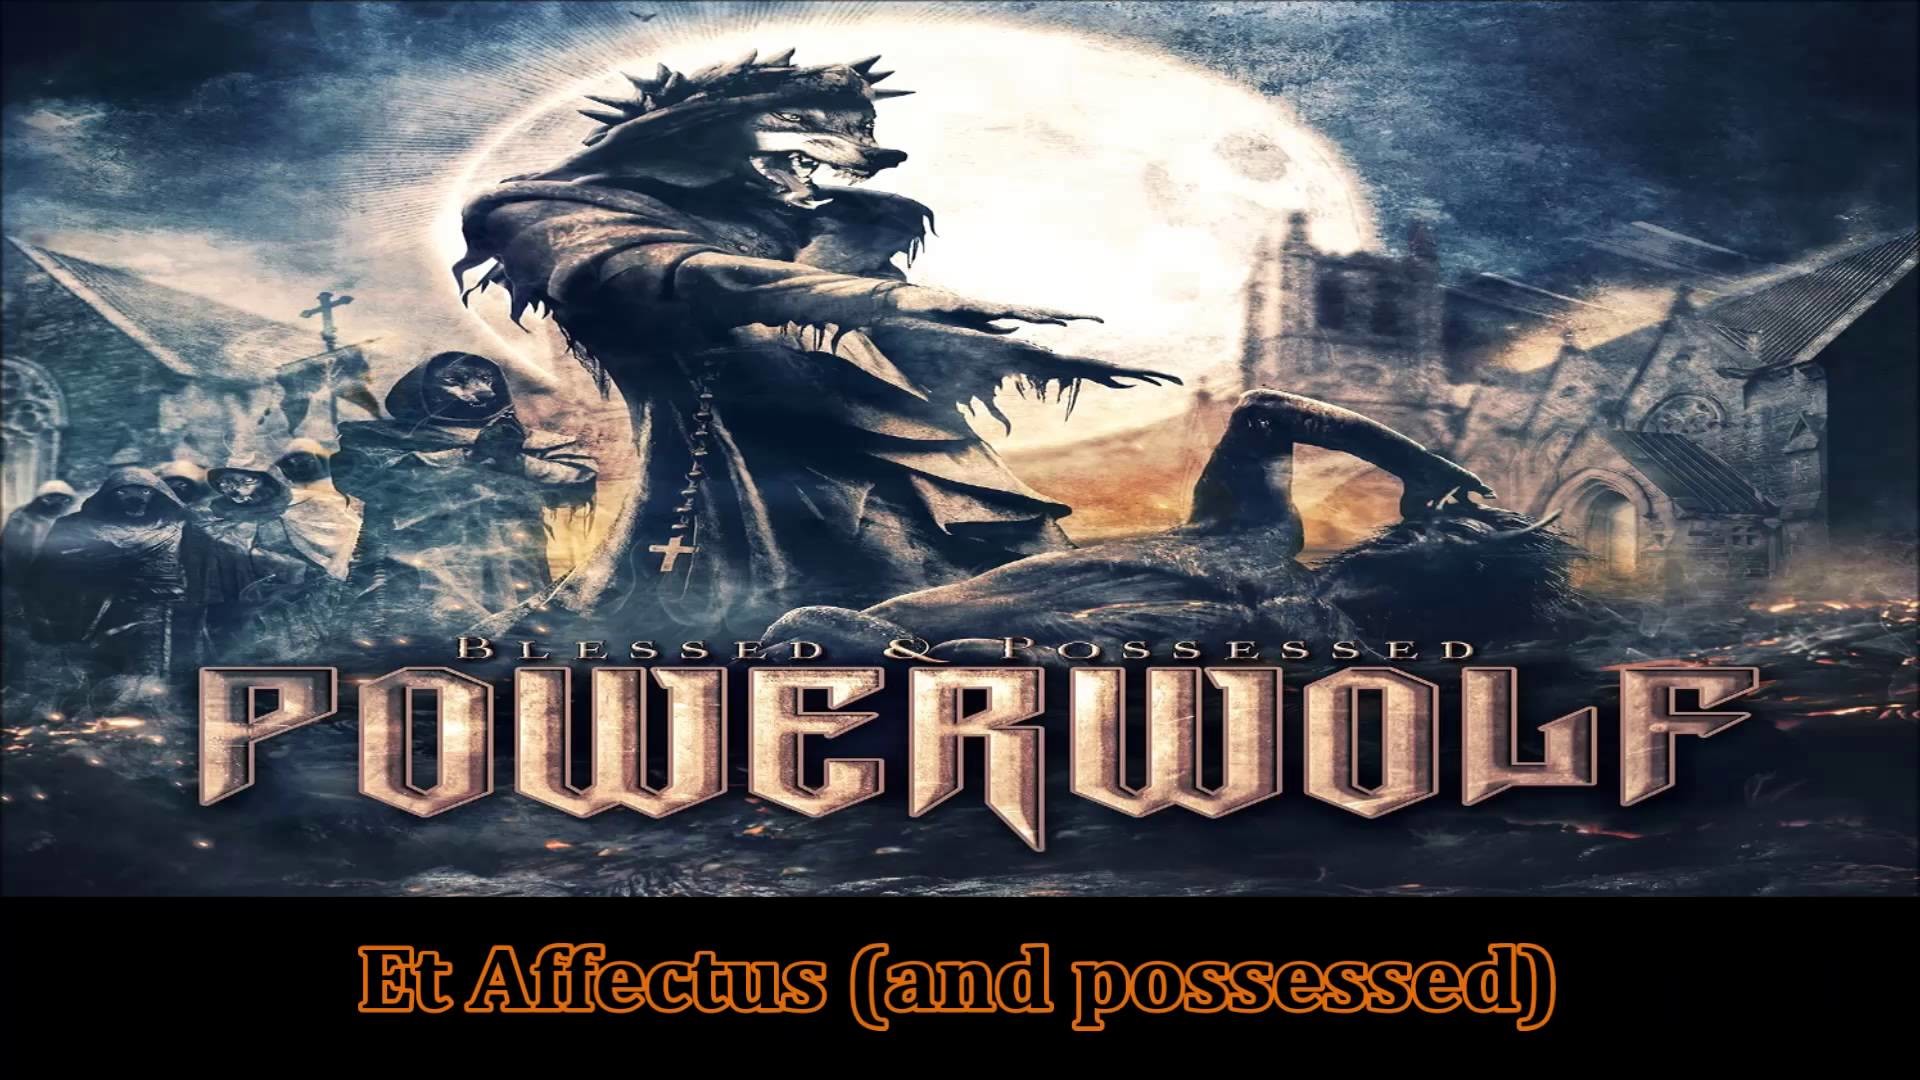 1920x1080 Powerwolf - Blessed and Possessed [Lyrics Video]